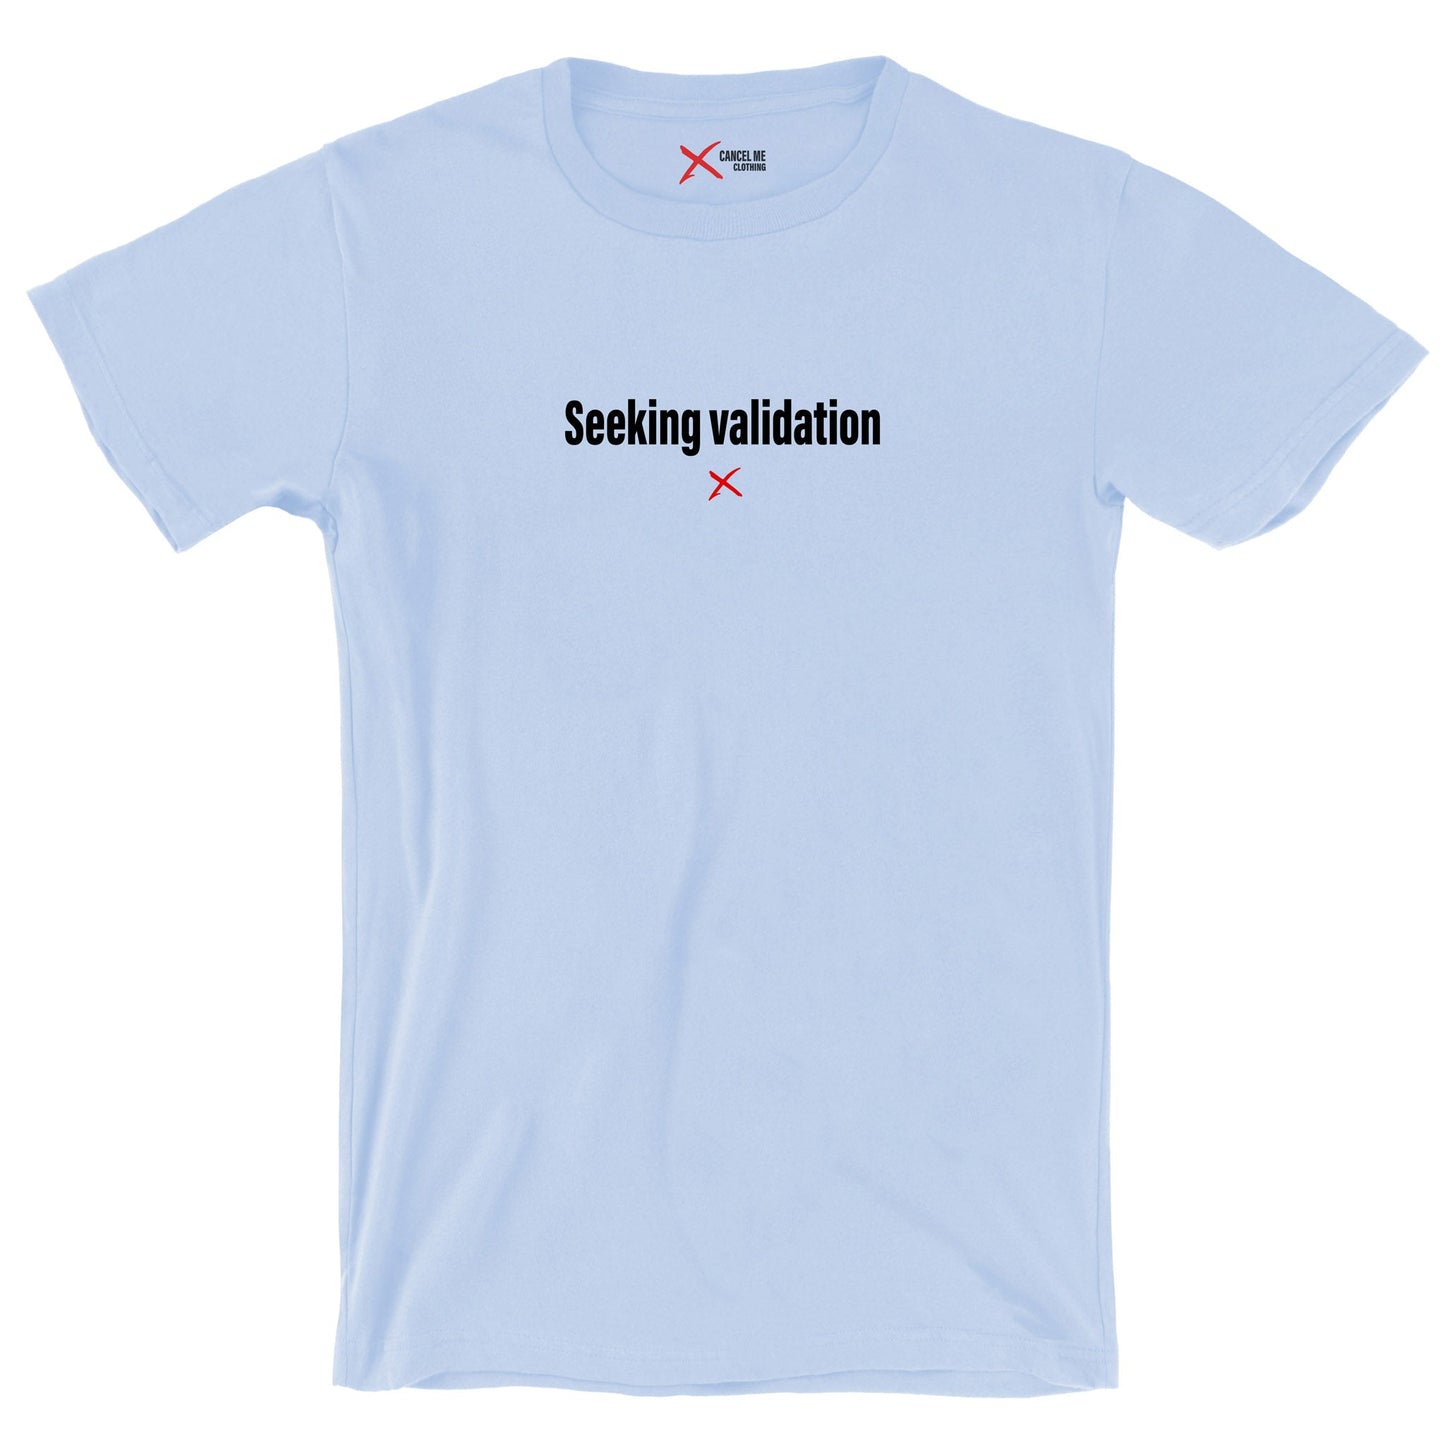 Seeking validation - Shirt